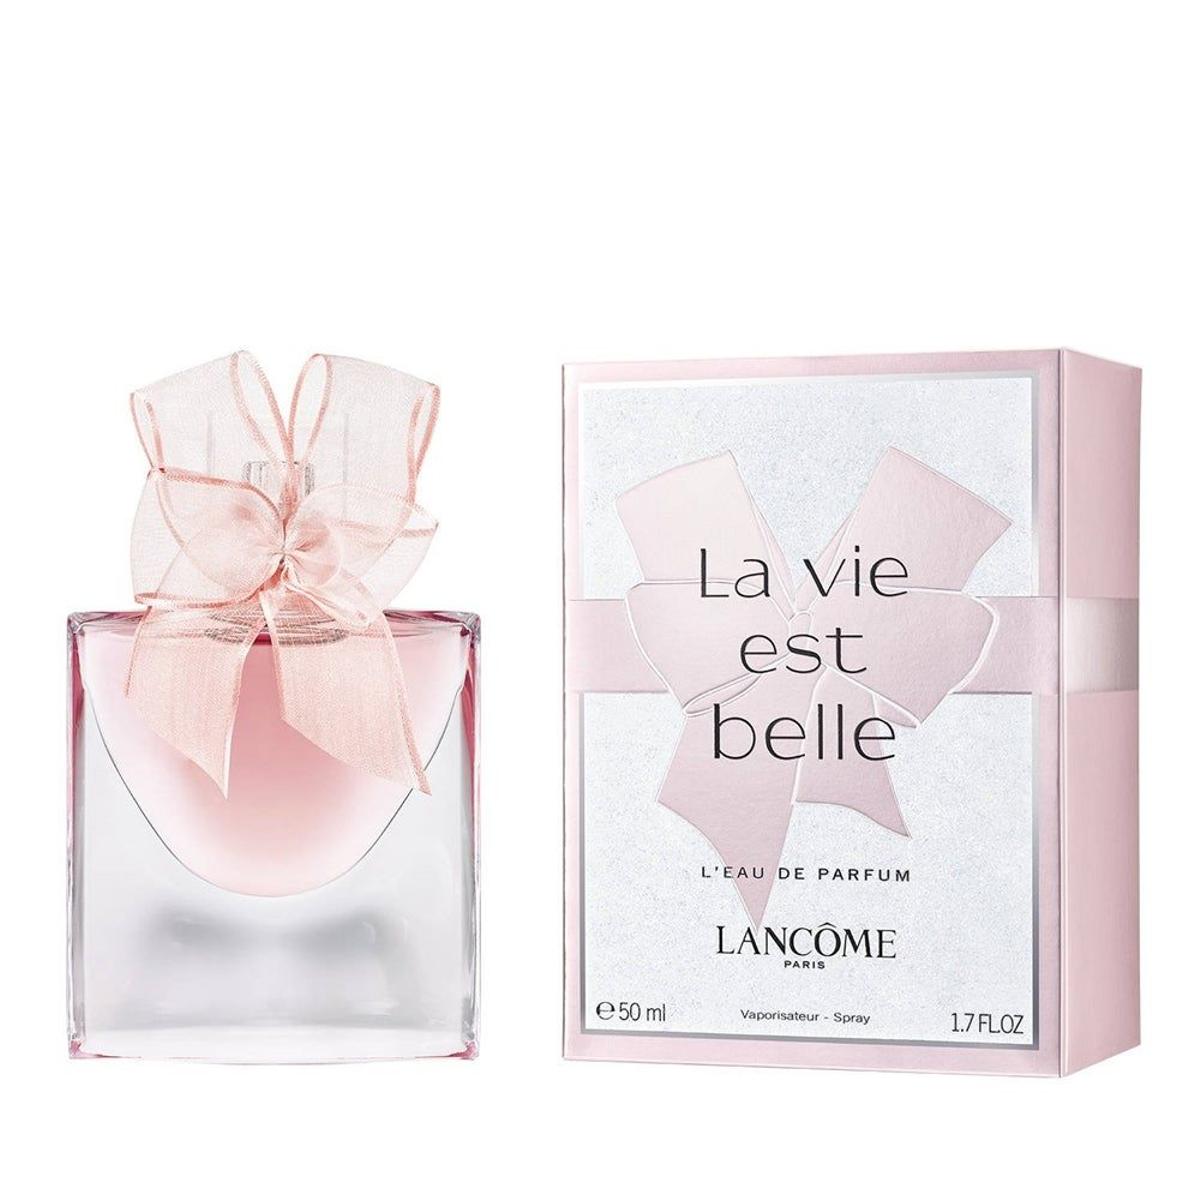 Perfume de Lancome en Sephora. Precio: 54,95 euros